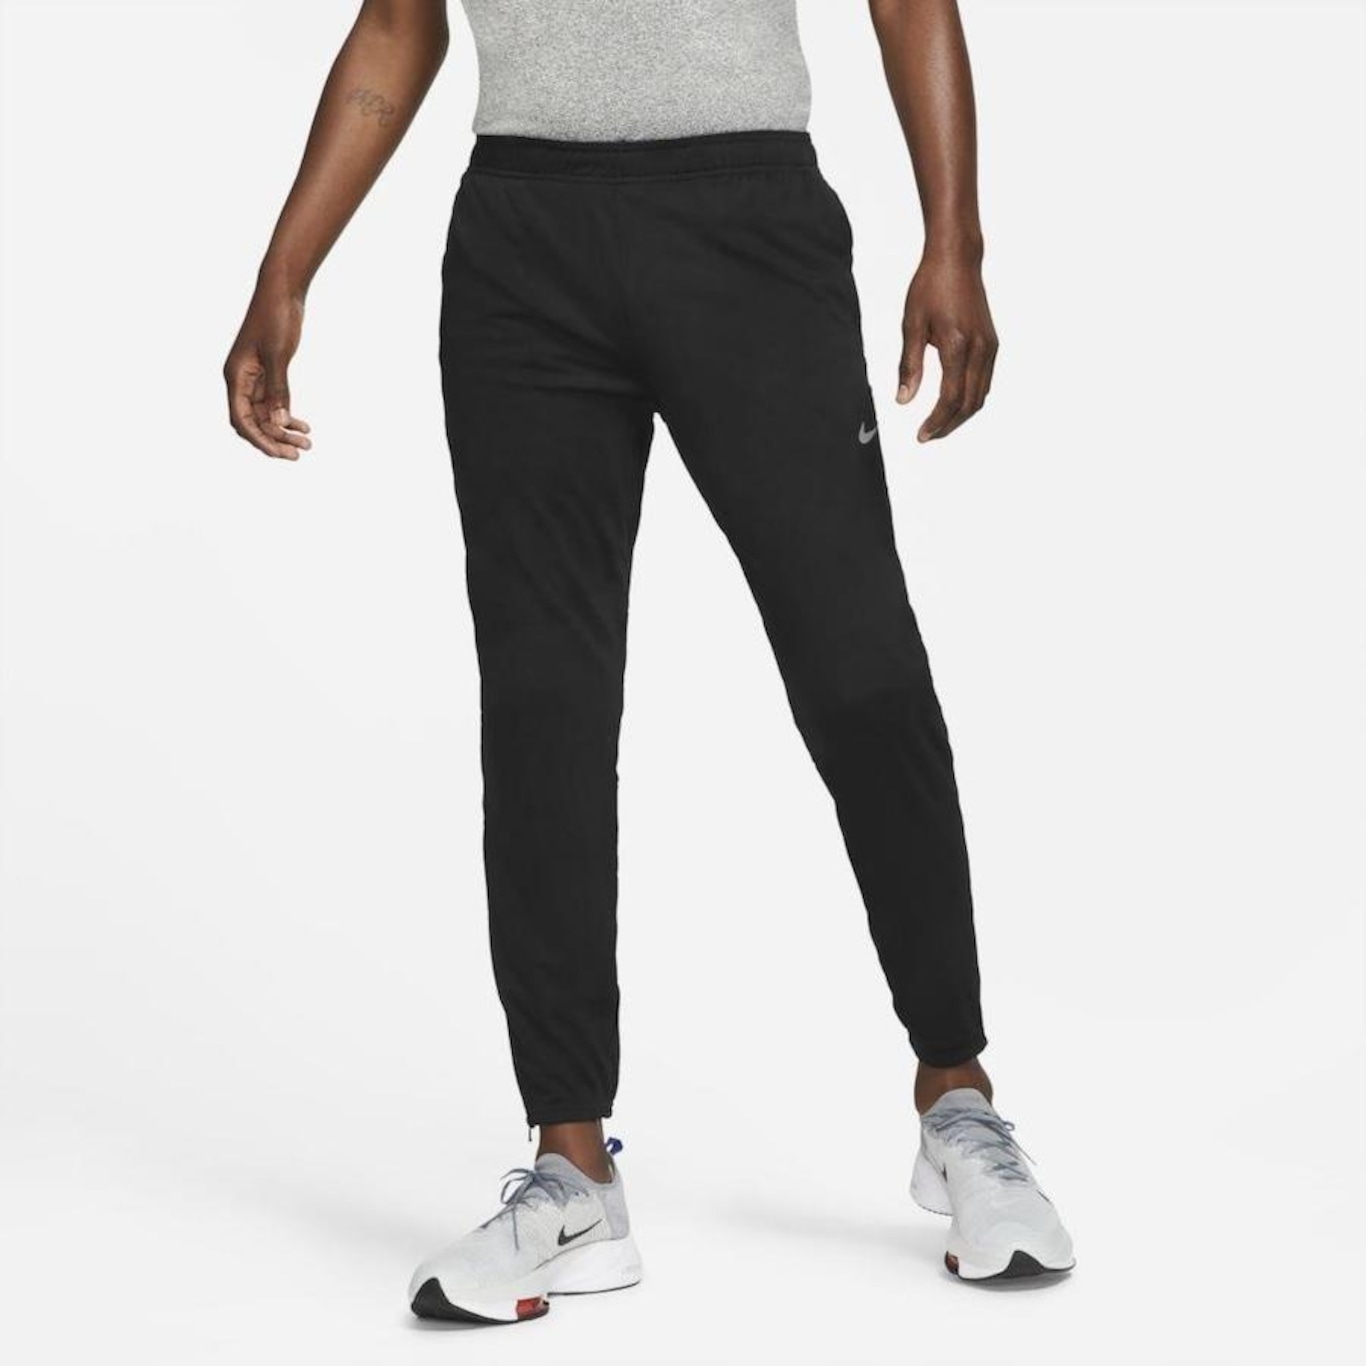 Legging Nike Dri-fit Challenger Masculina